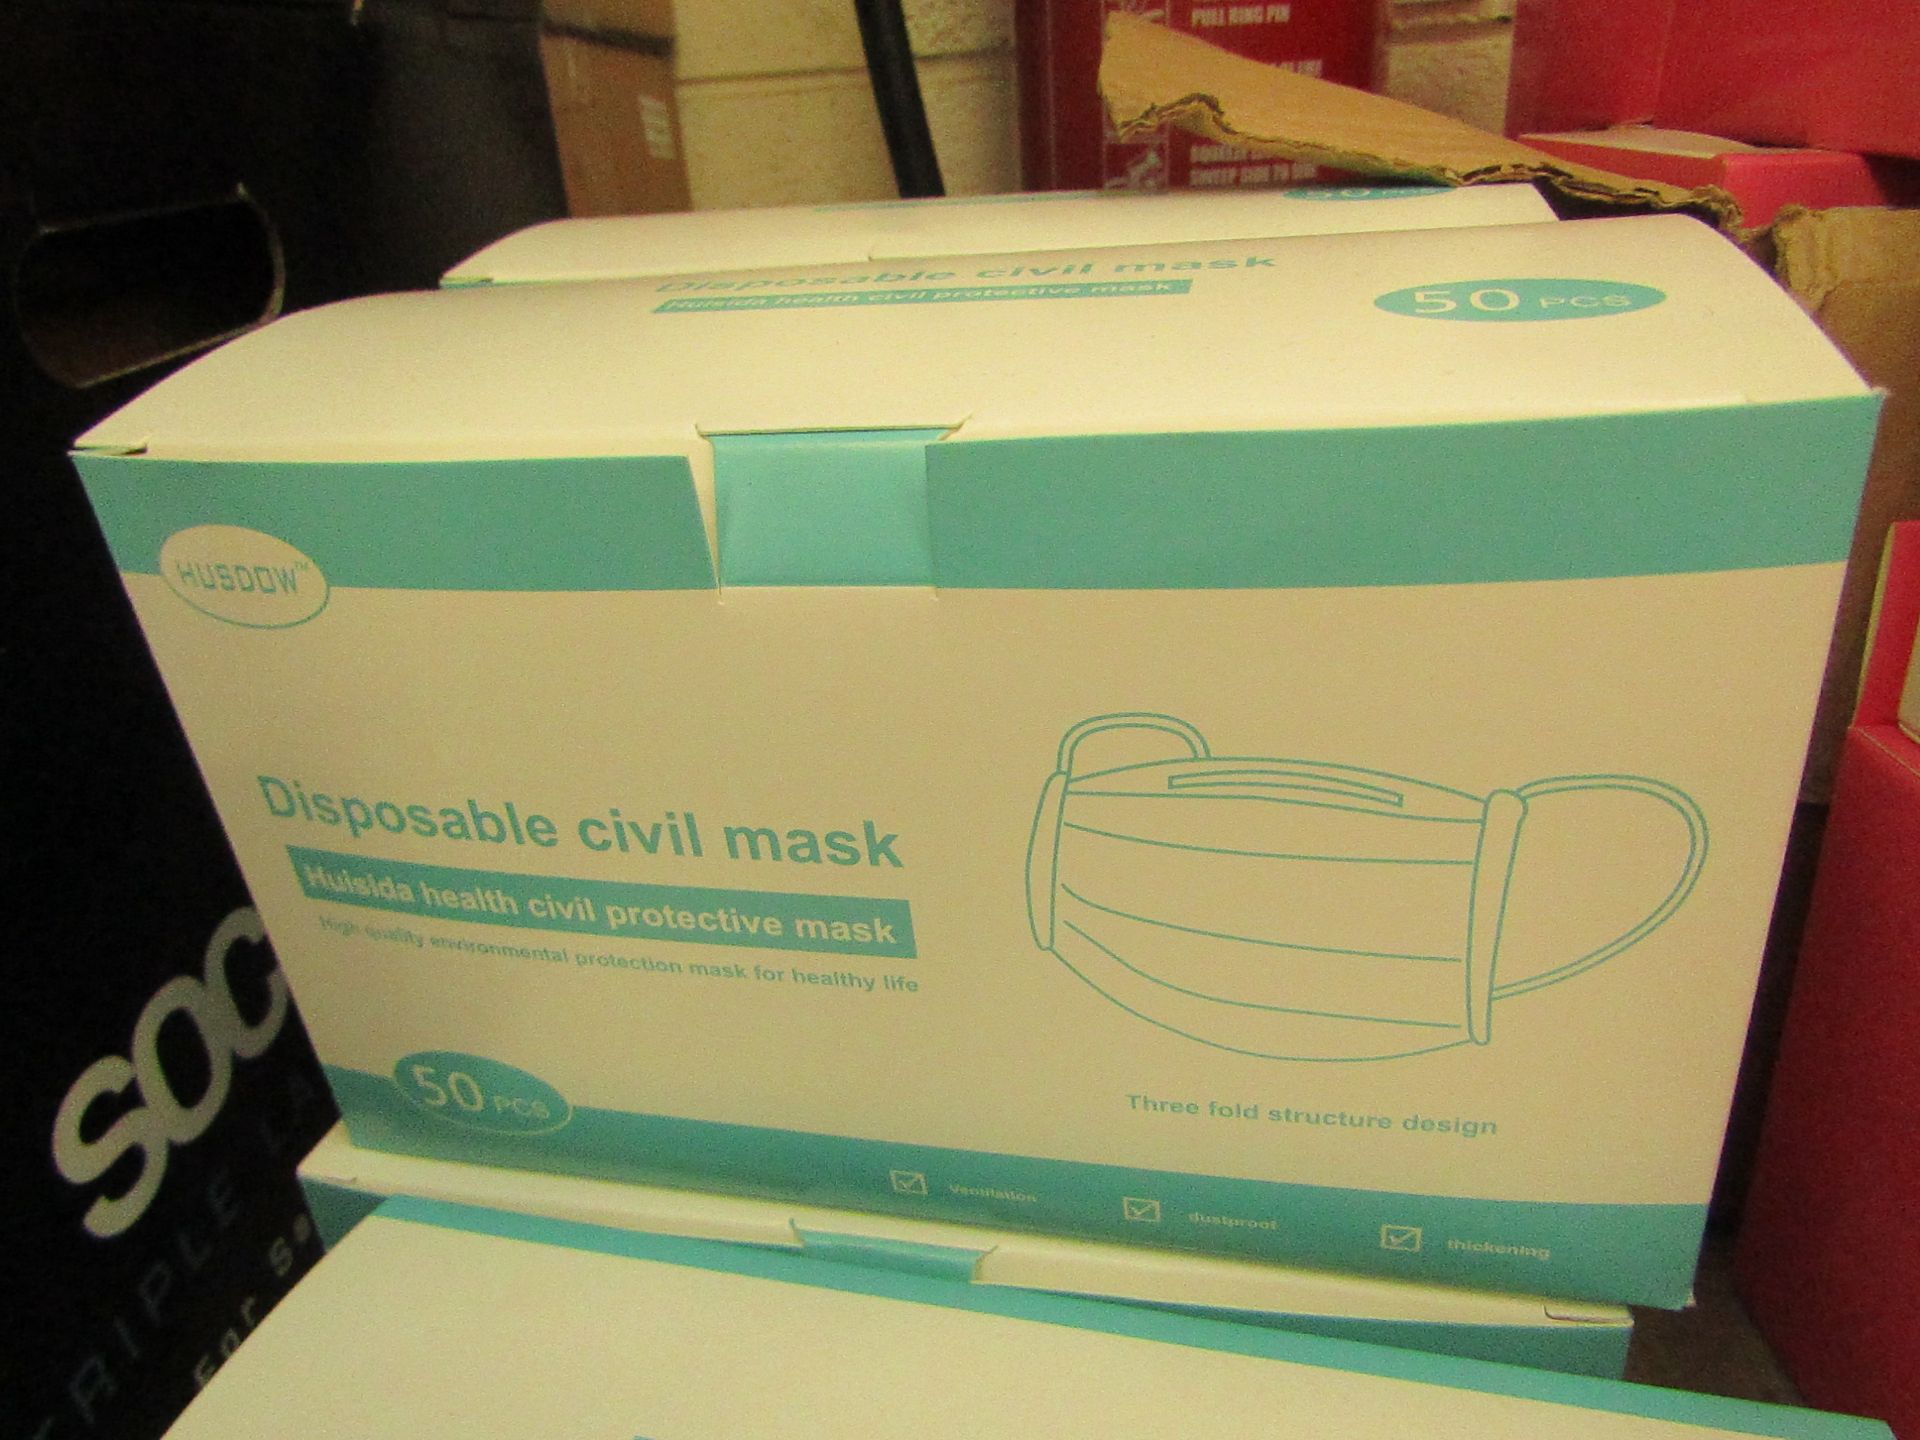 Husdow - Disposable Civil Mask ( 50 Masks ) - Unused & Boxed.